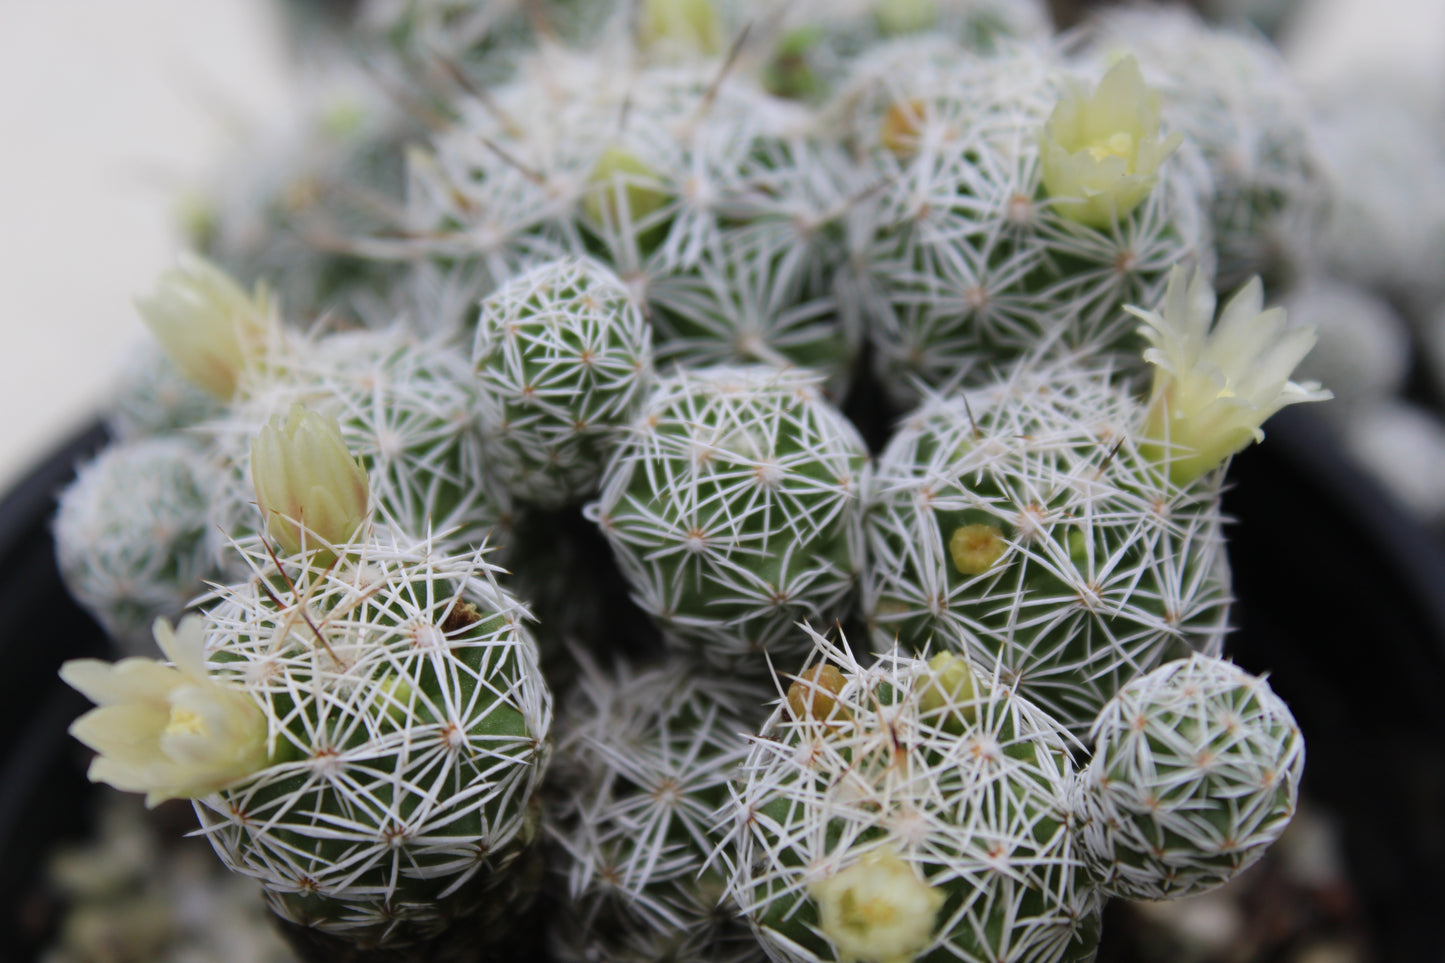 Mammillaria gracilis fragilis "Thimble Cactus"